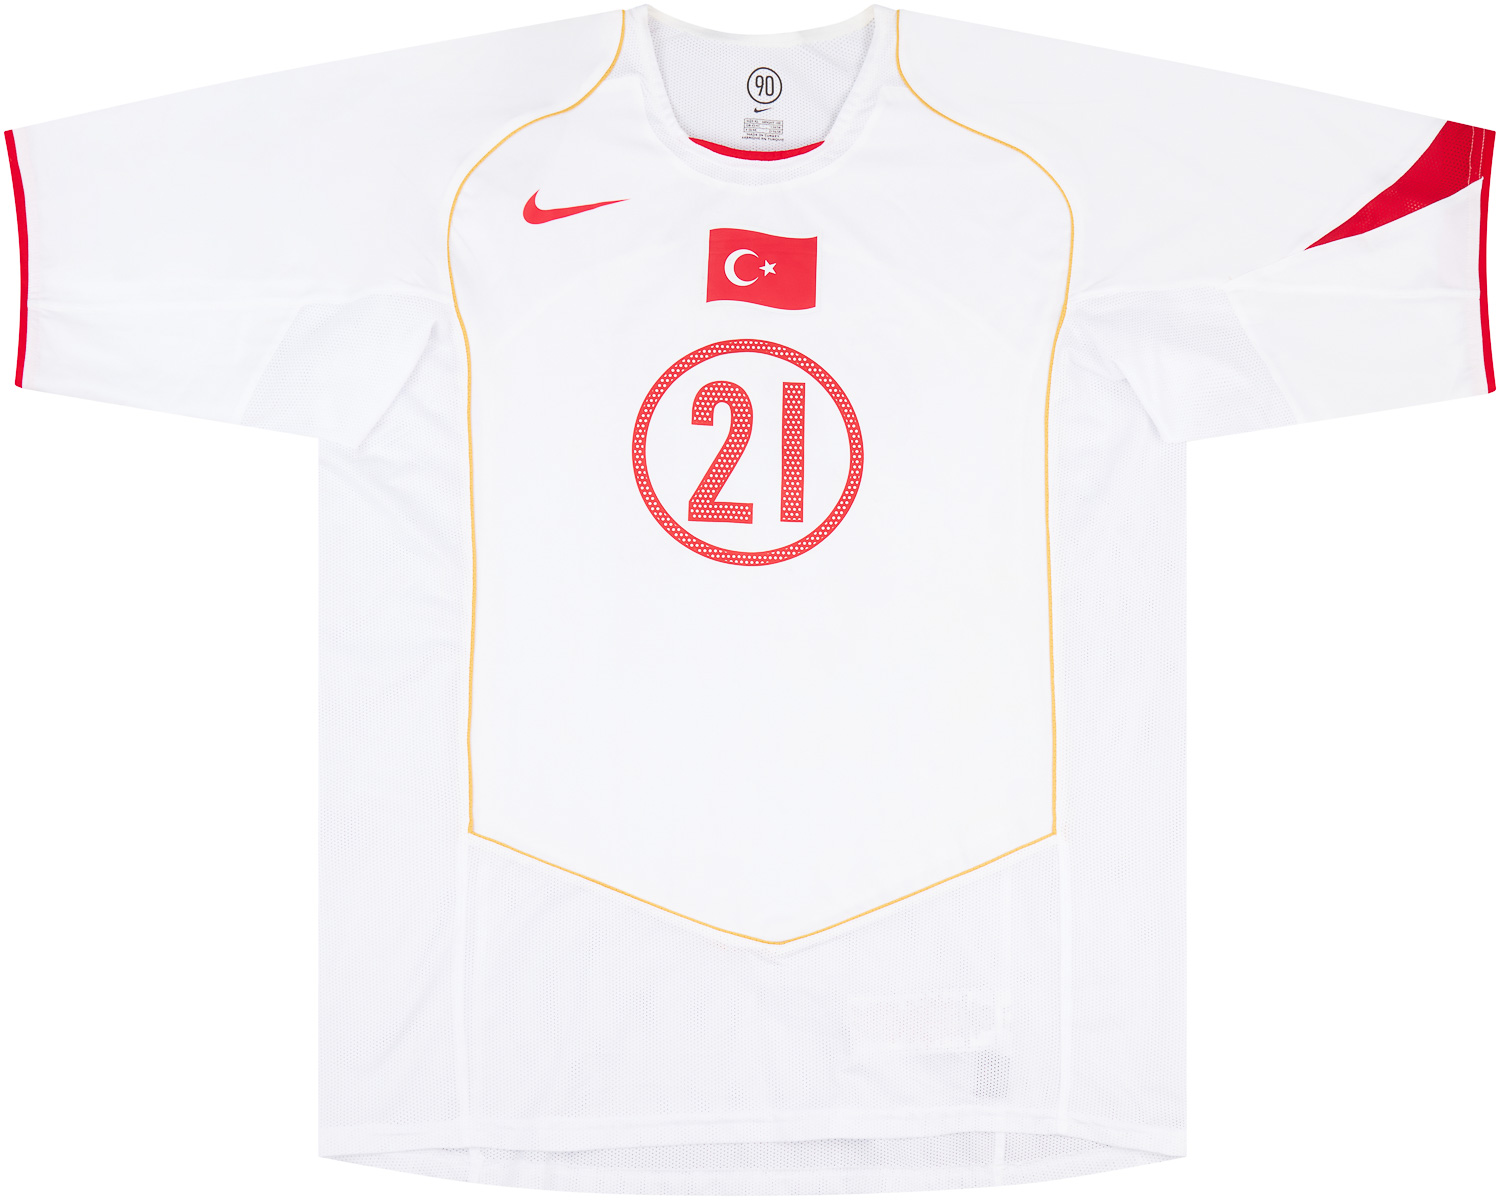 2004-05 Turkey Match Issue Home Shirt Sas #21